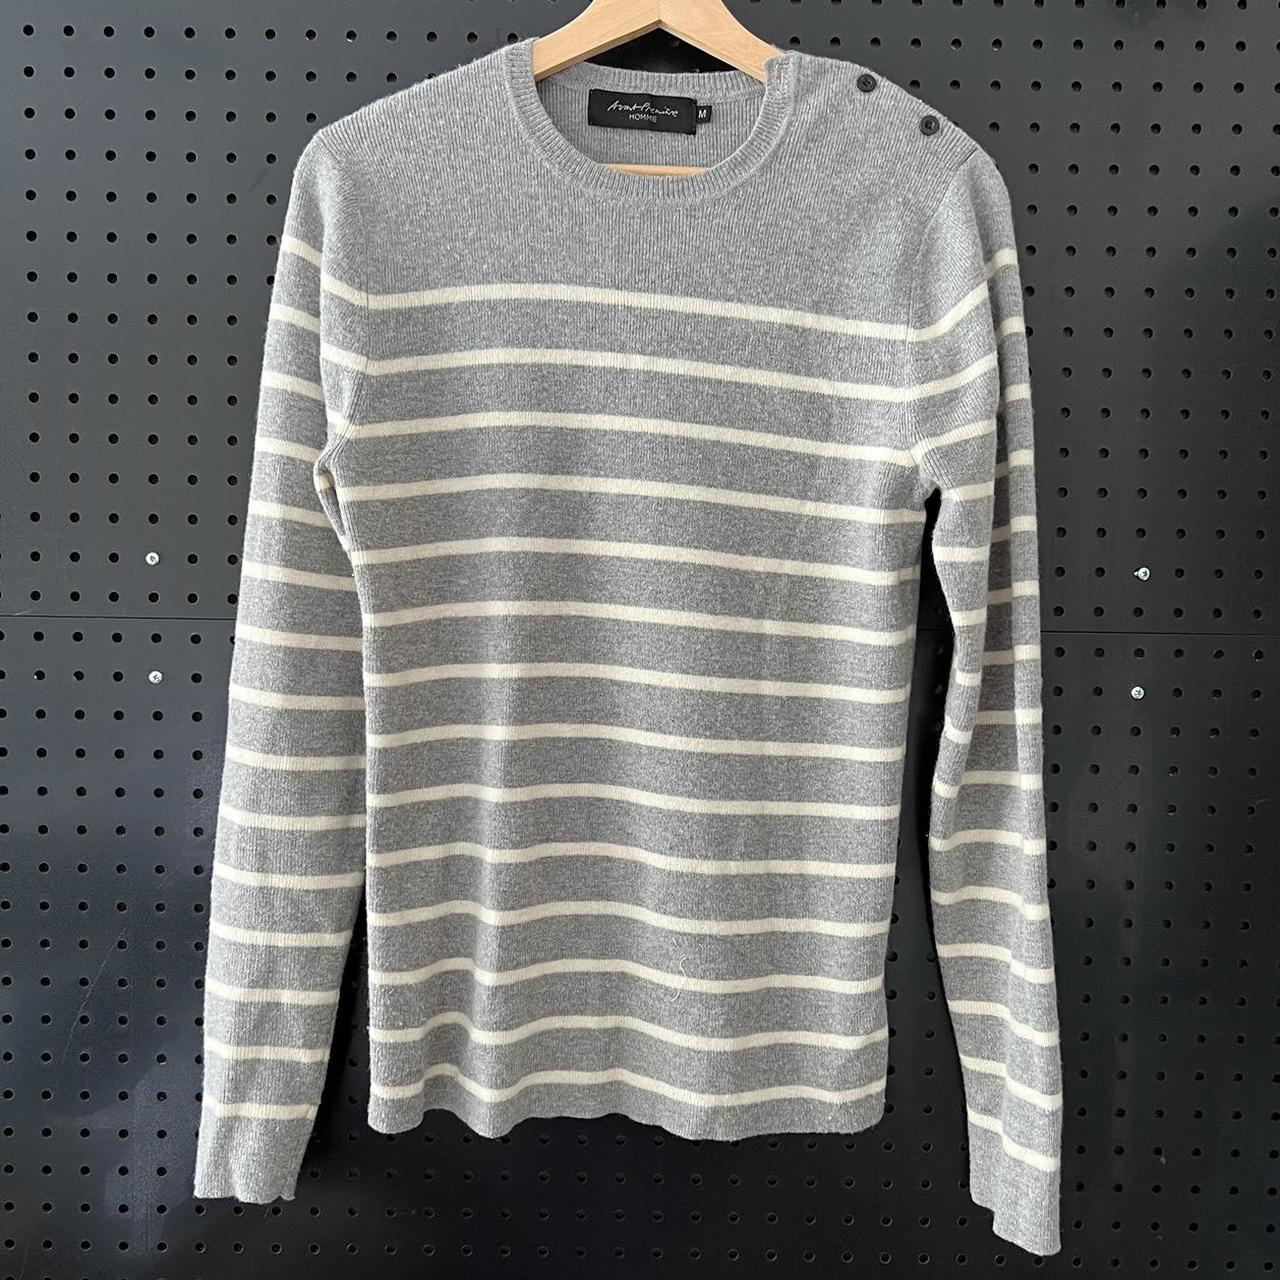 Vintage French mariner sweater - Depop